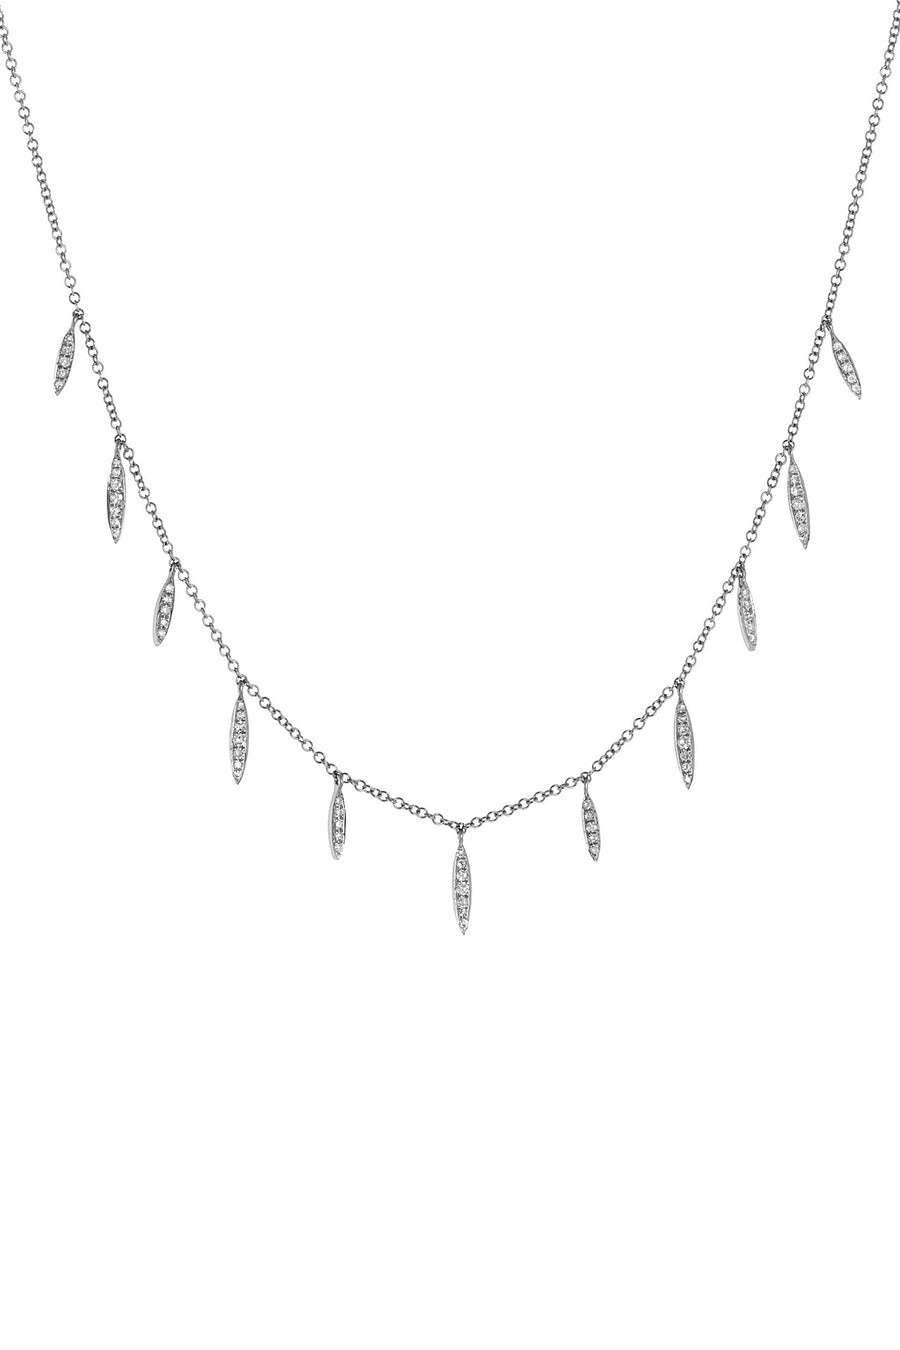 Multi-diamond dangle necklace in 14k white gold